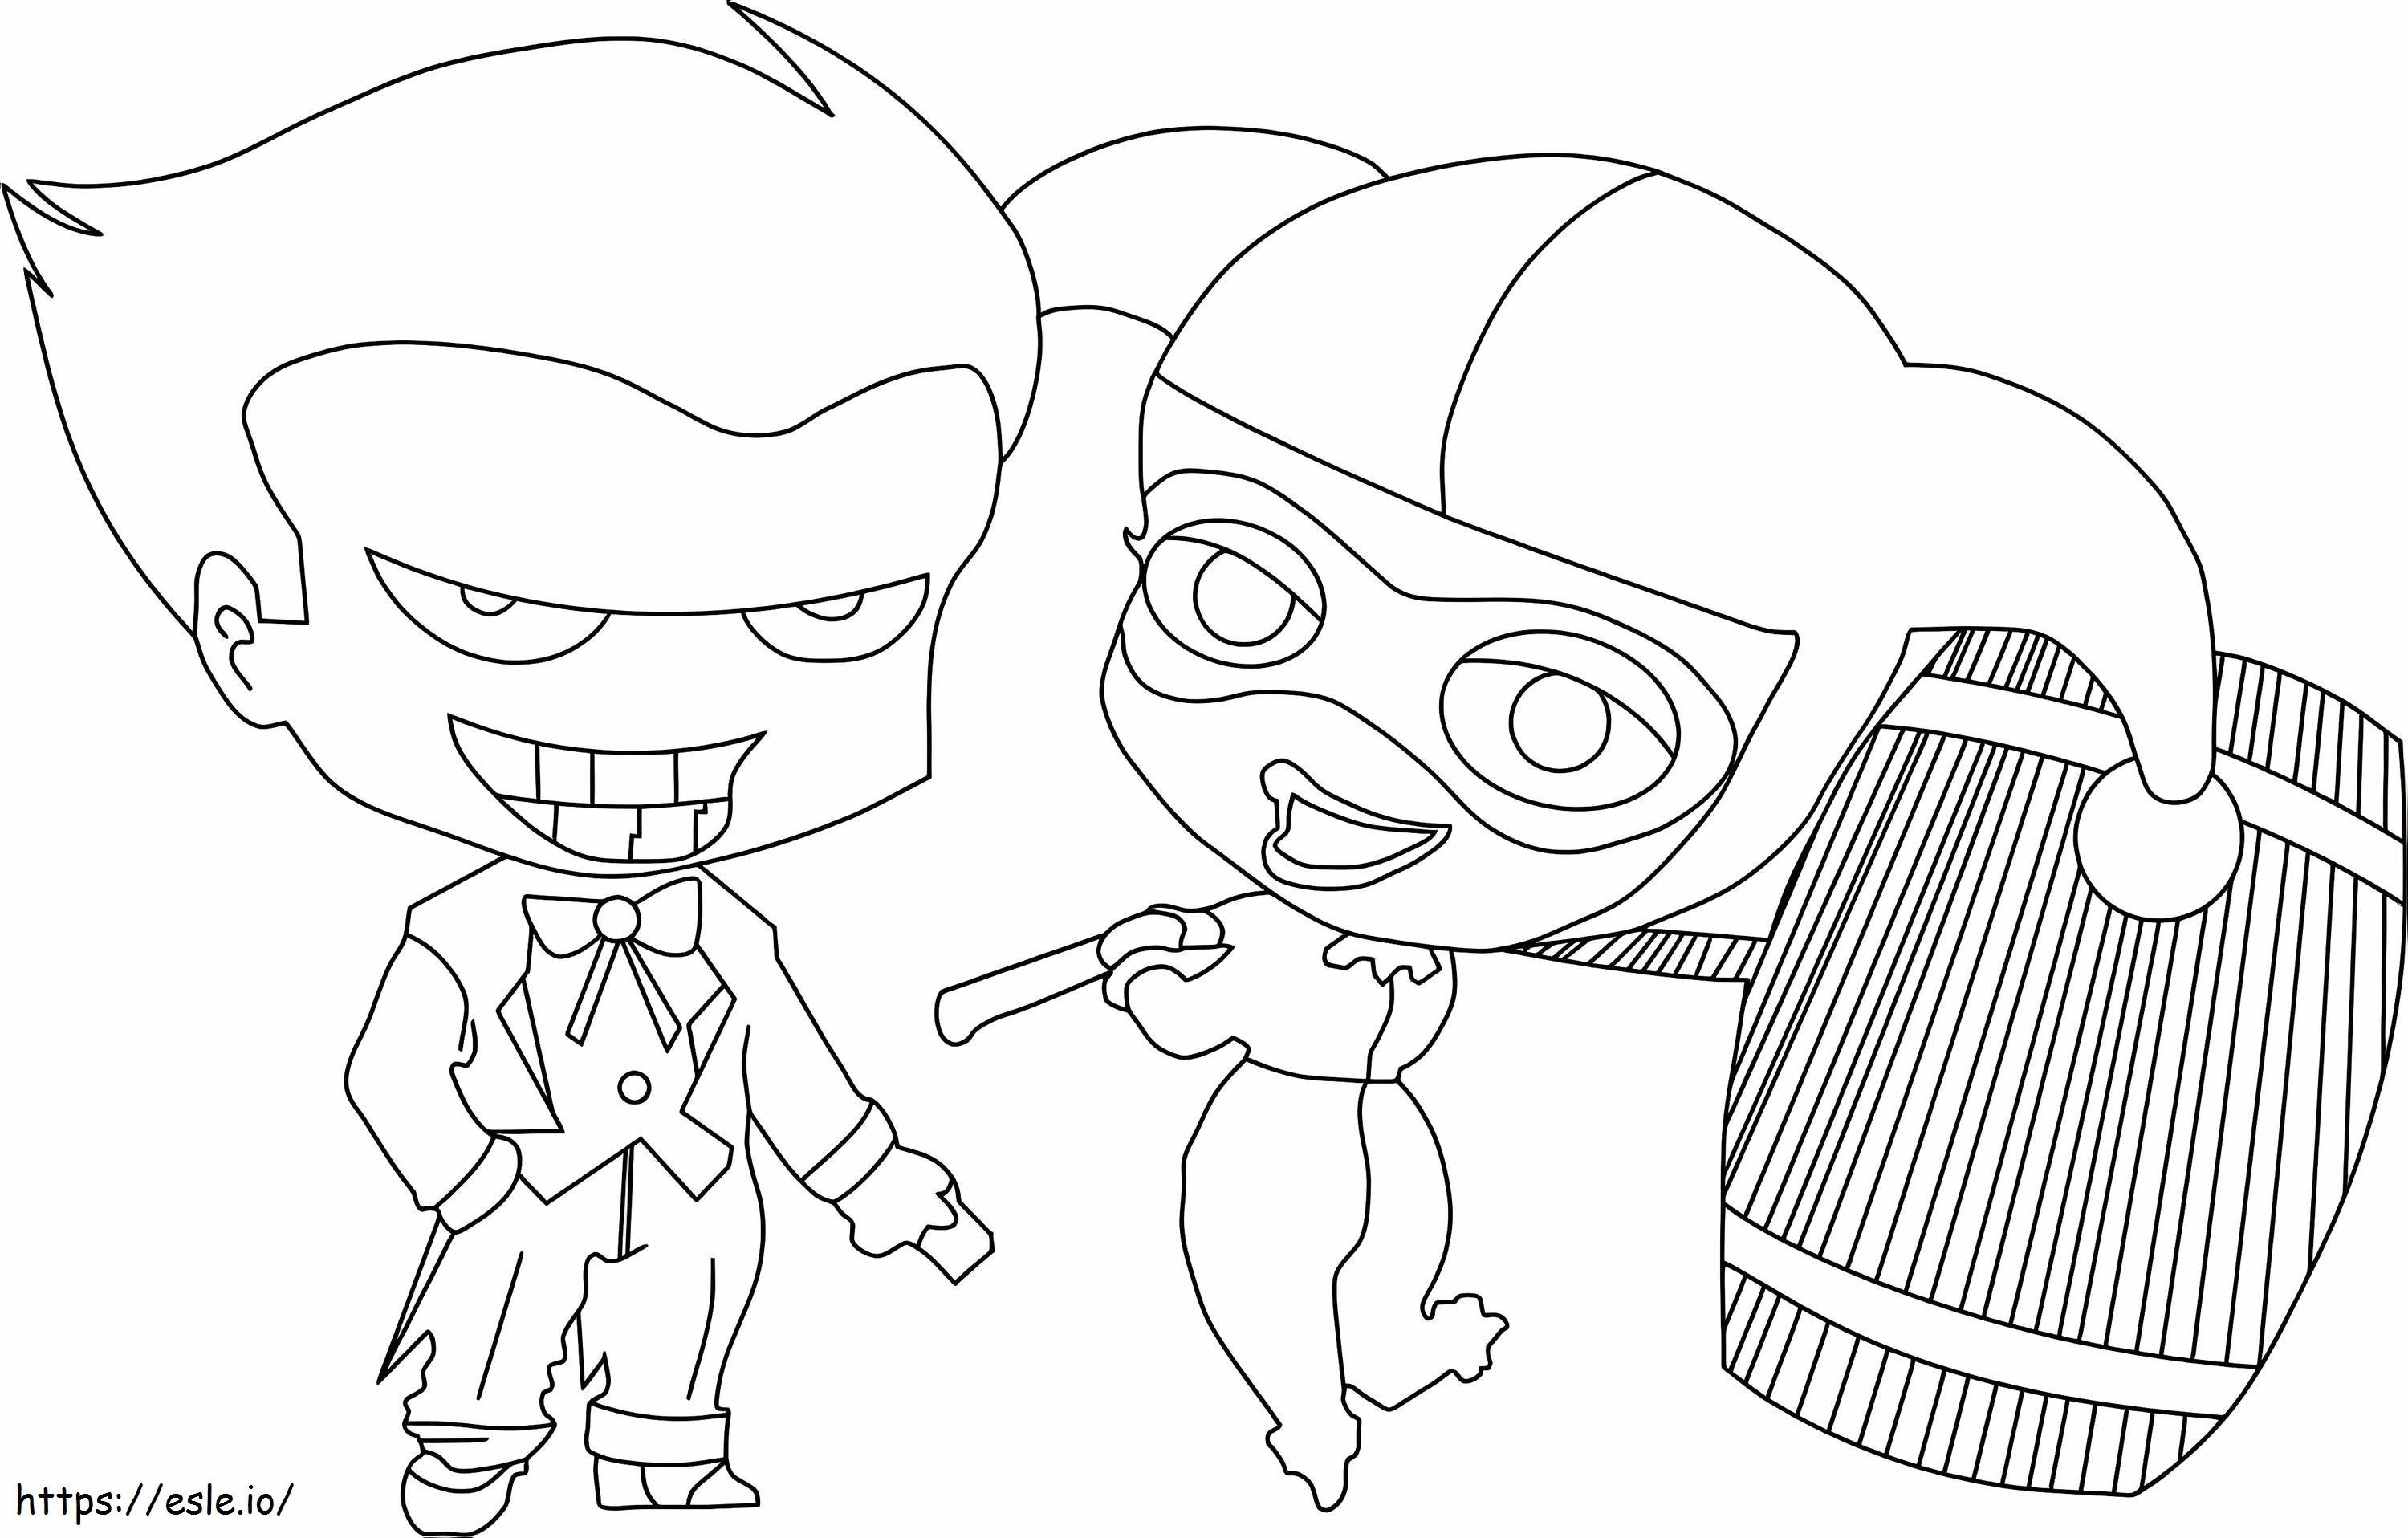 Chibi Joker e Chibi Harley Quinn segurando um martelo para colorir